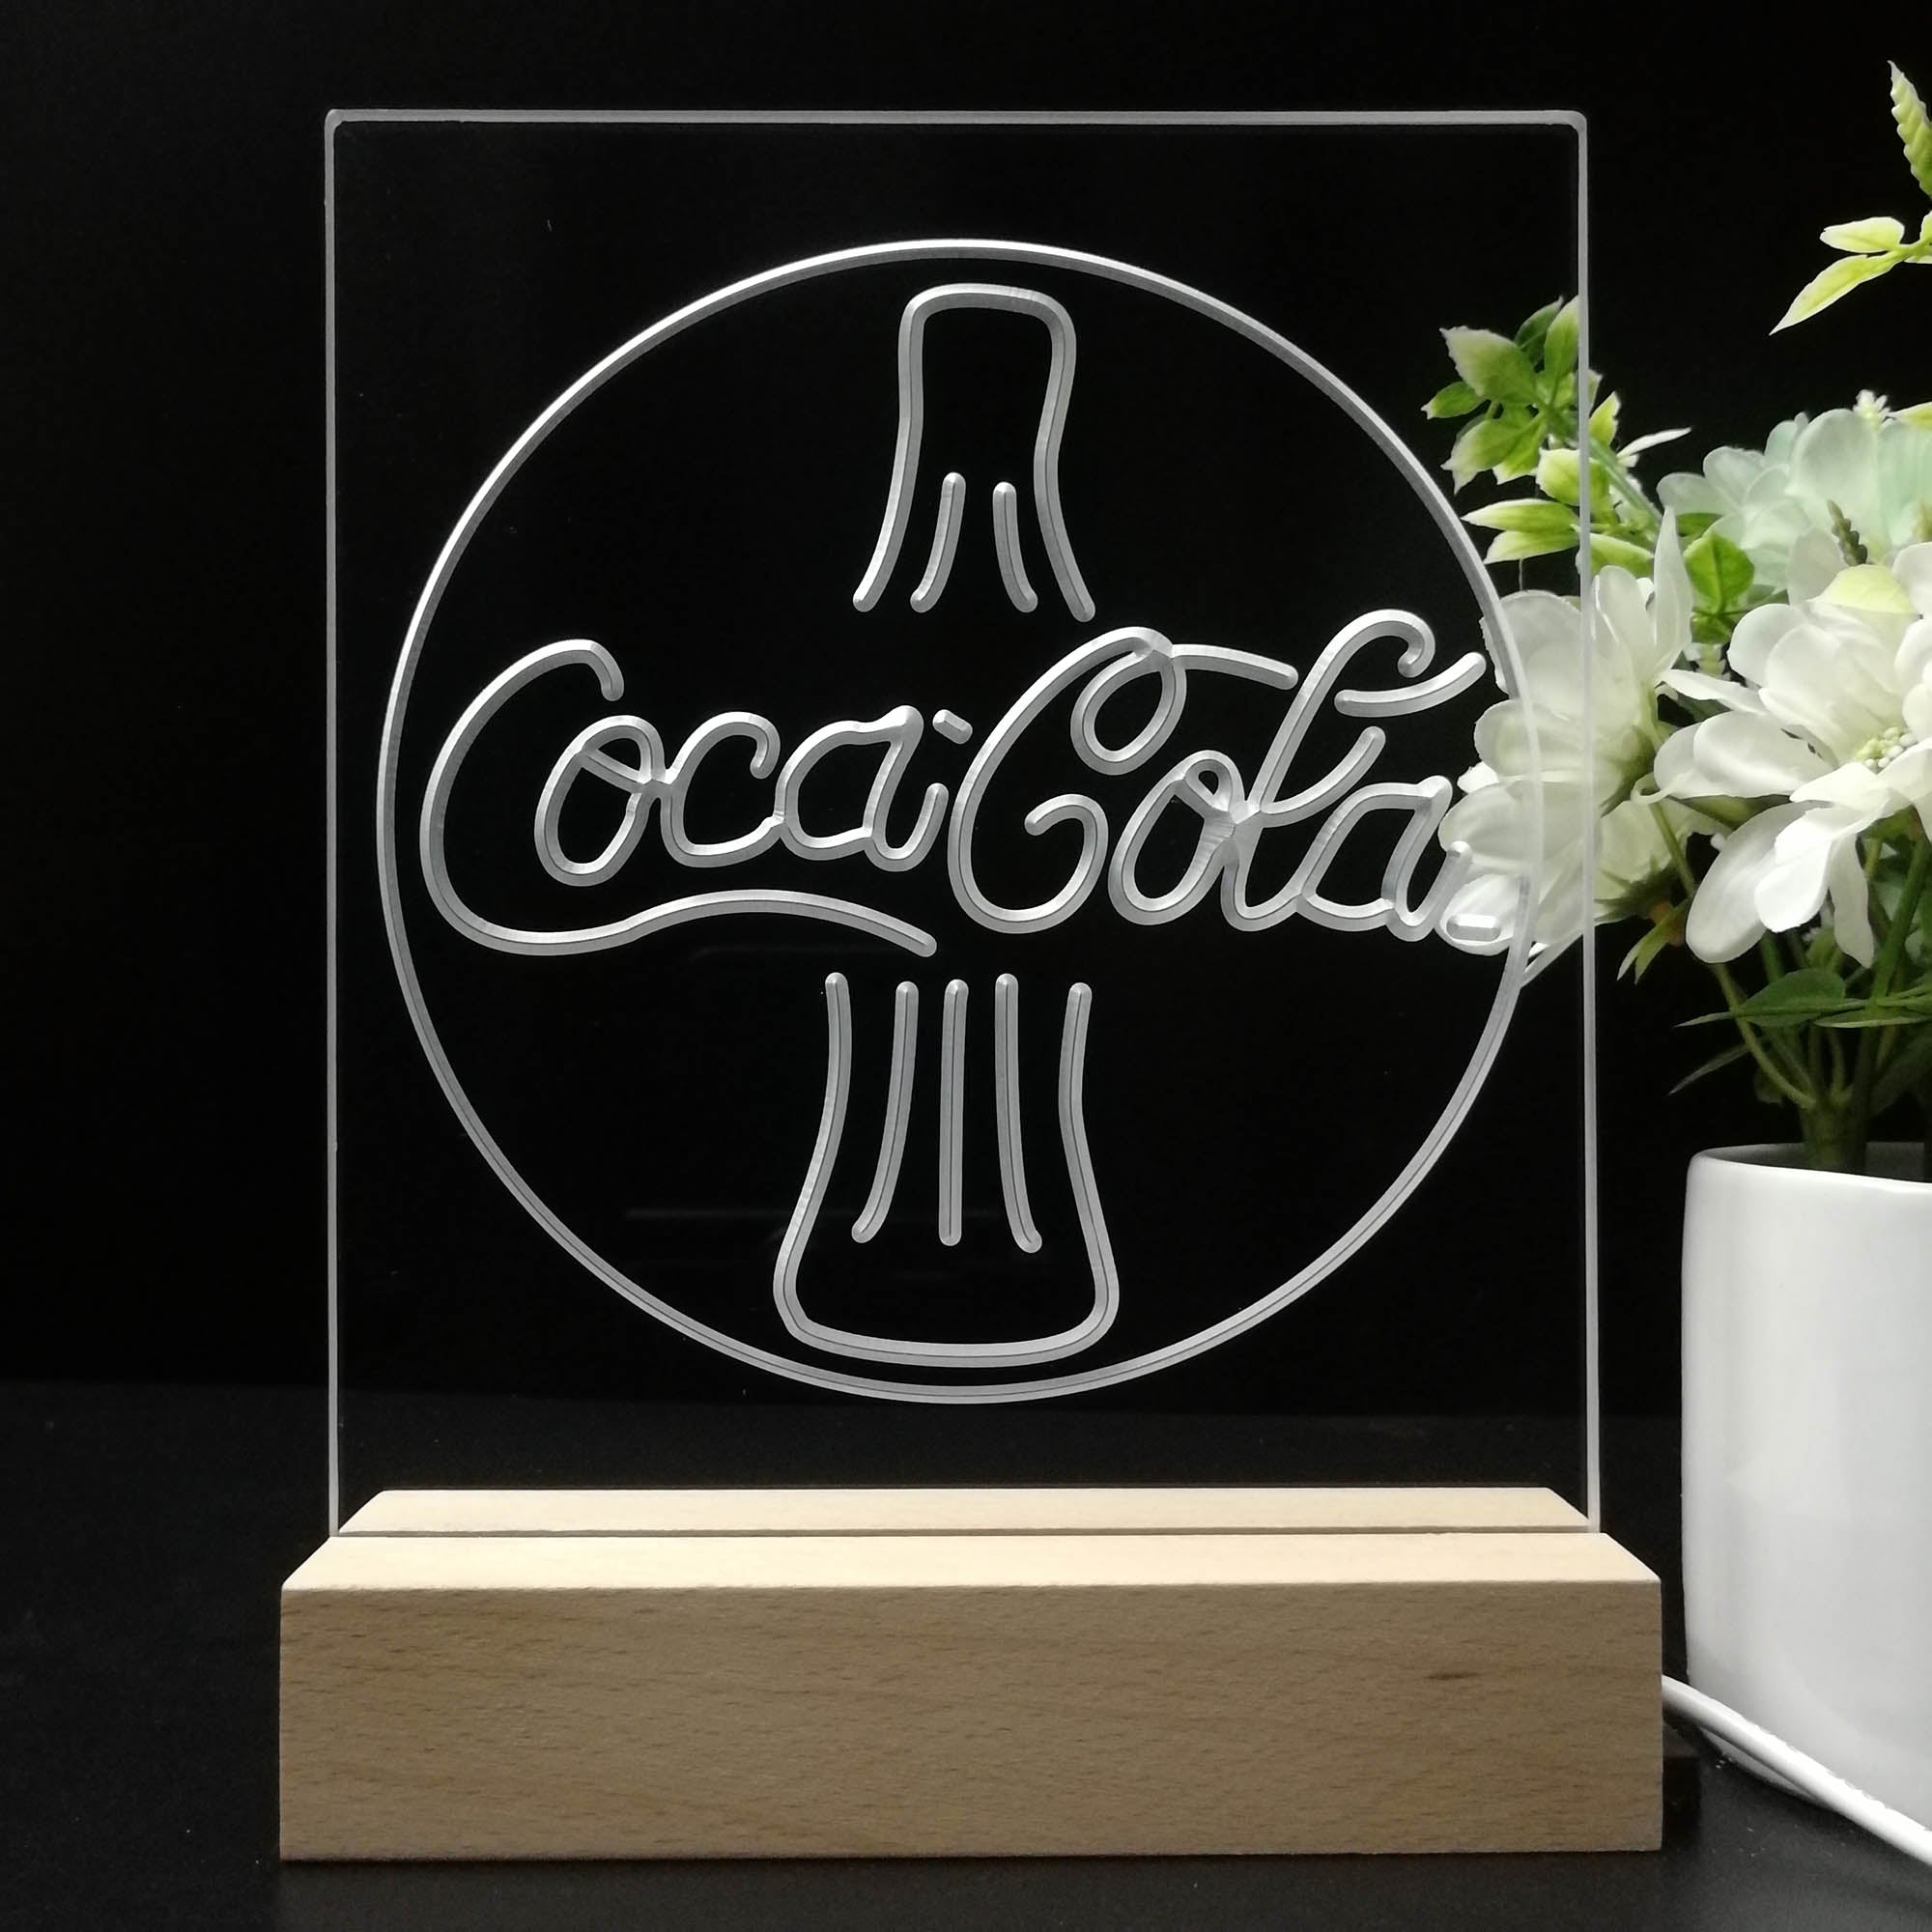 Coca Cola Cokes Bottle Bar Decoration Gifts 3D Illusion Night Light Desk Lamp